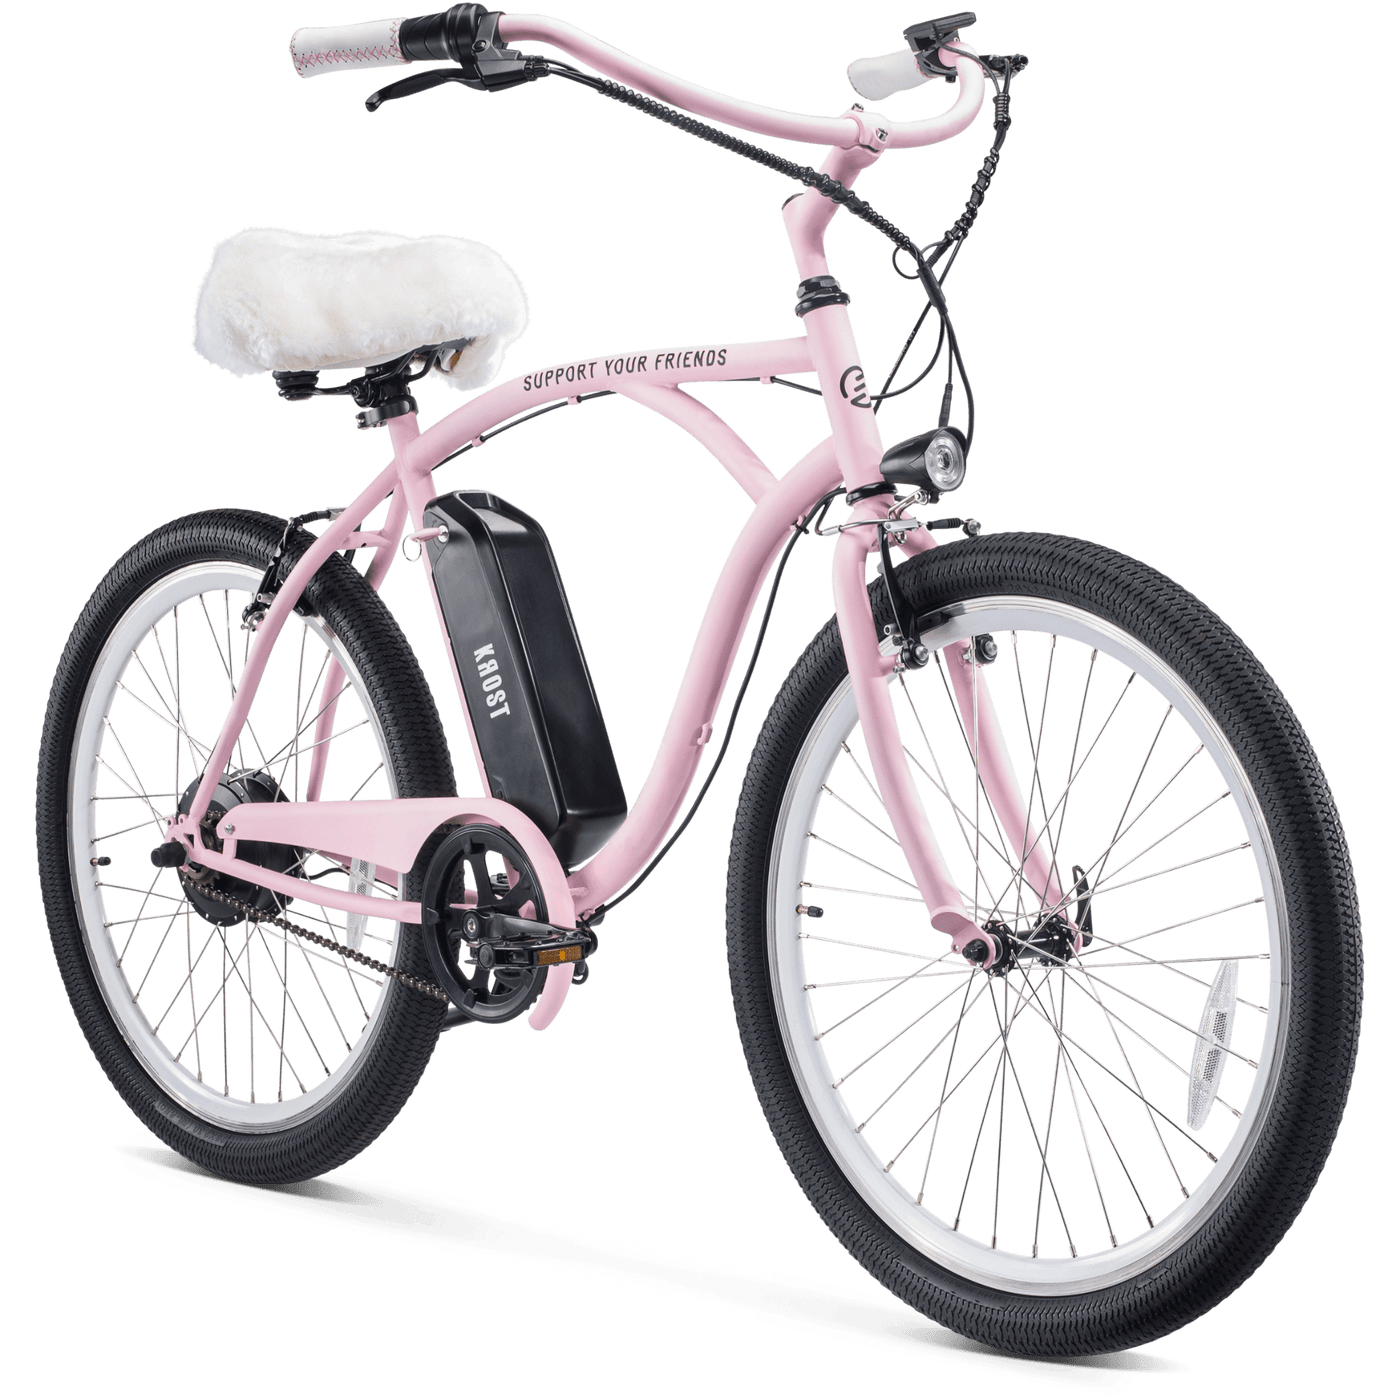 SWFT Krost 46.8V 10AH Electric Bike - Rider Cycles 